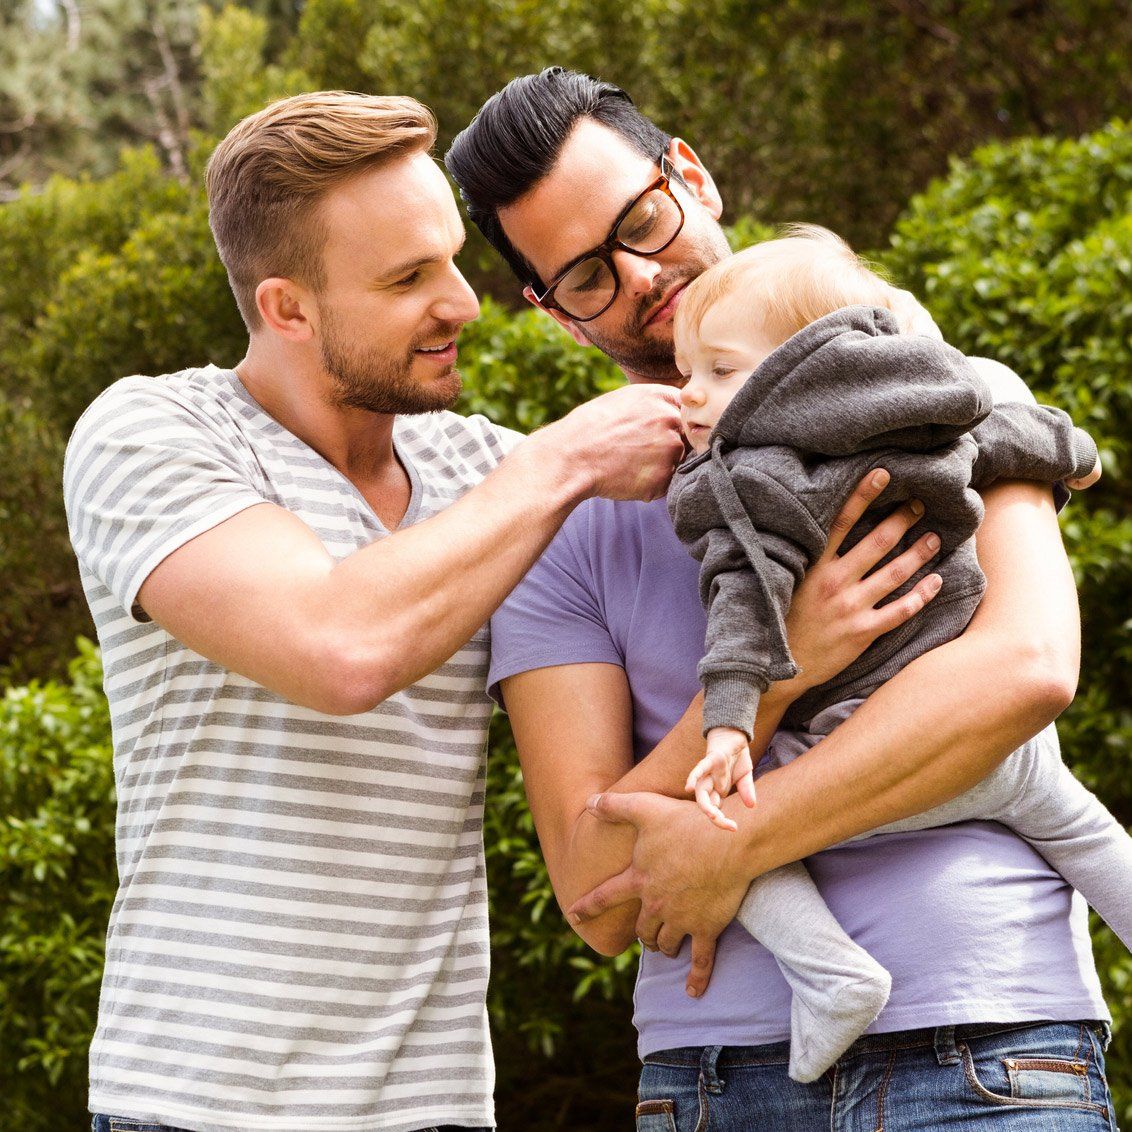 Philadelphia Surrogate — LGBT Couple with Baby in Philadelphia, PA